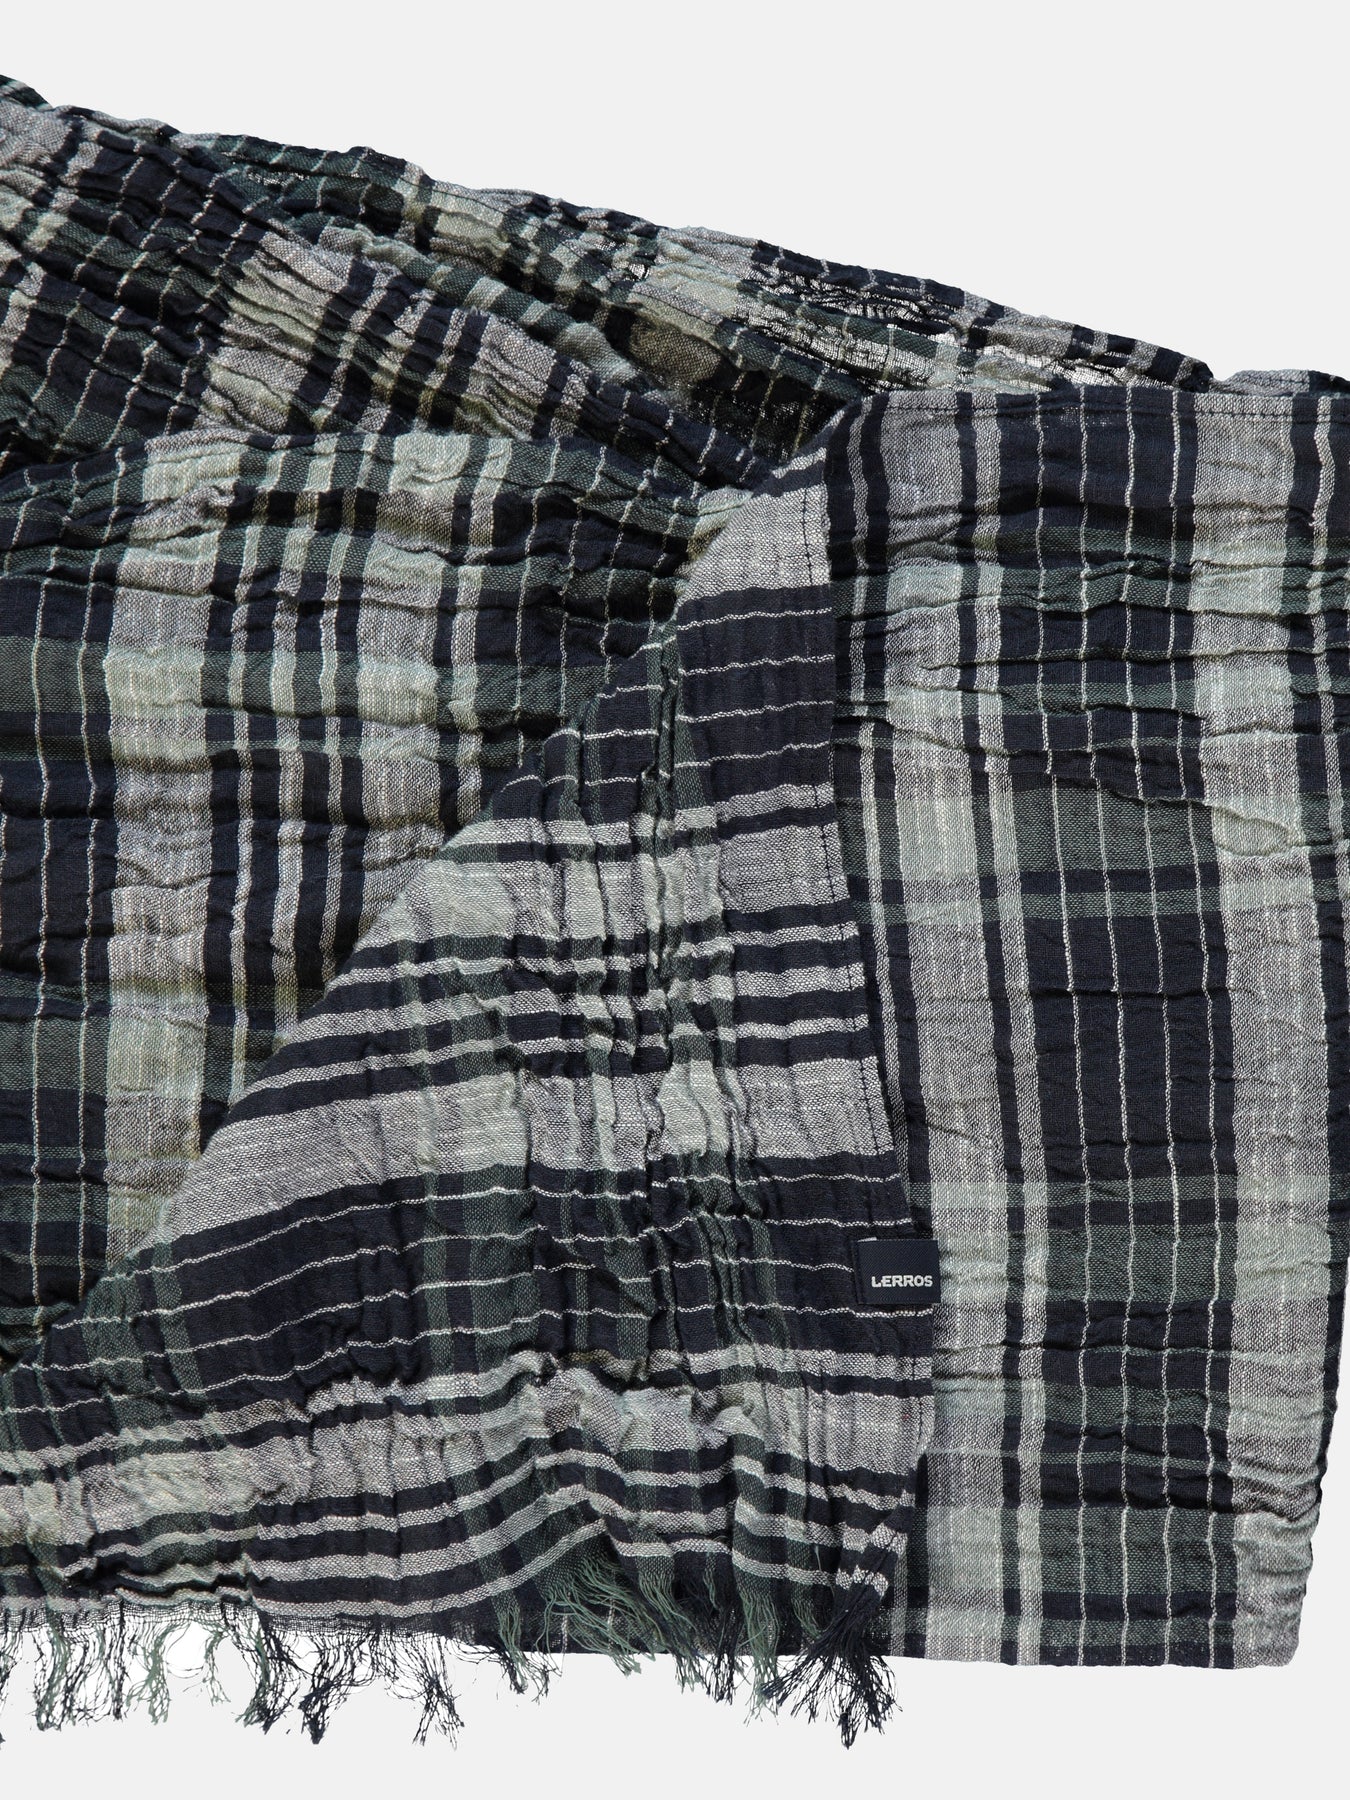 – Stripe-Check-Muster LERROS Schal mit SHOP